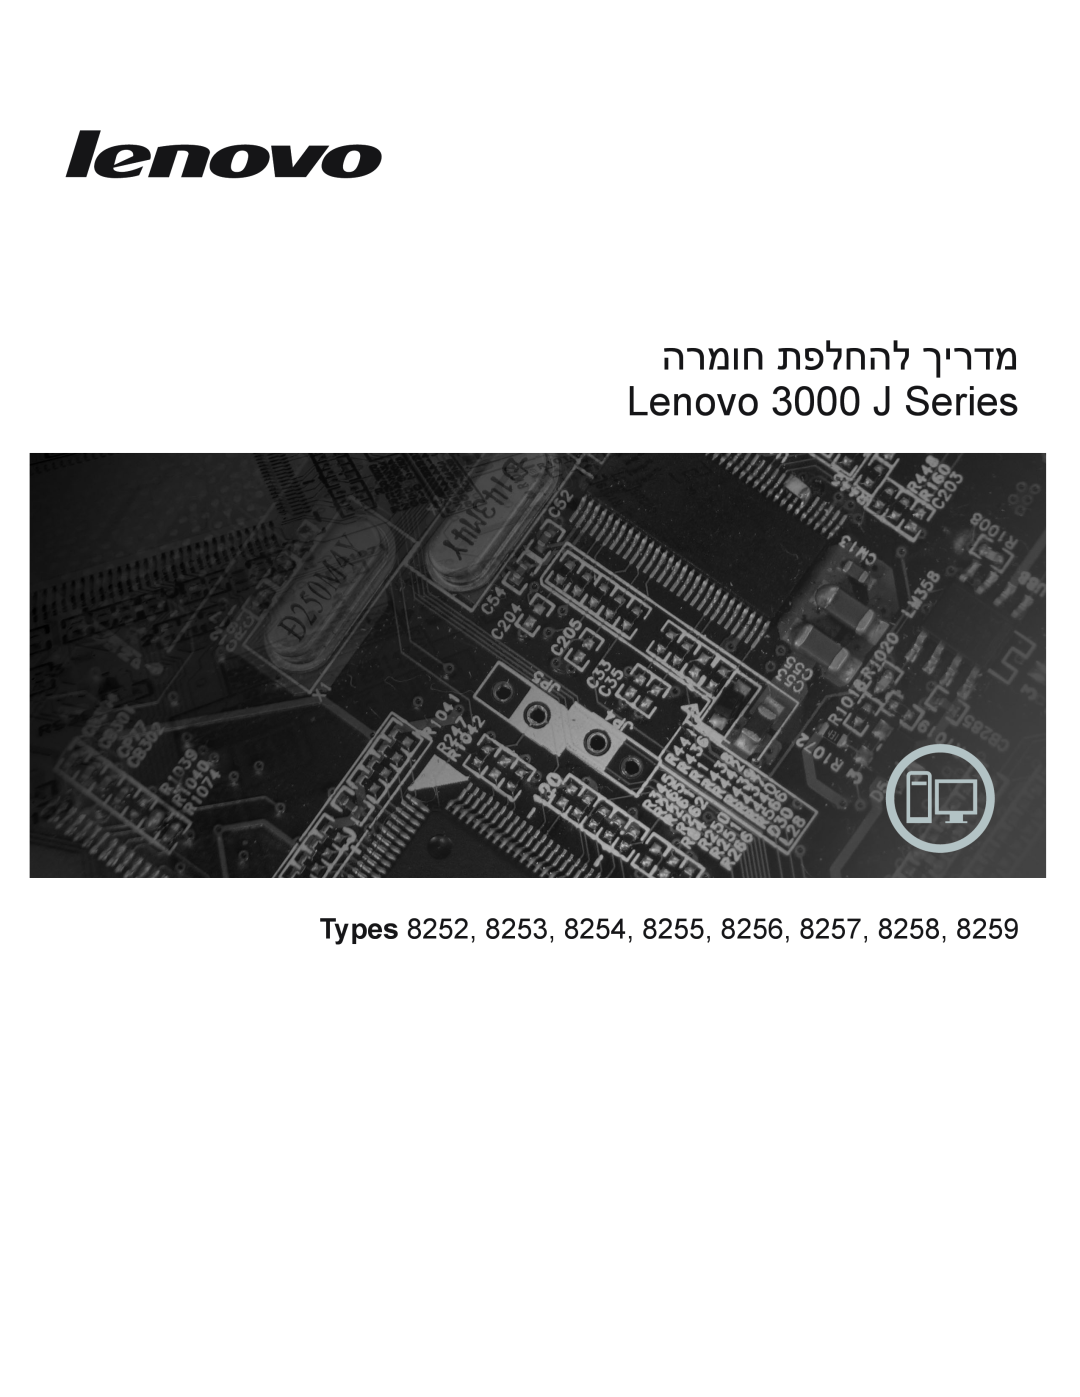 Lenovo 8258, 8259 manual הרמוח תפלחהל ךירדמ Lenovo 3000 J Series, Types 8252, 8253, 8254, 8255, 8256, 8257 